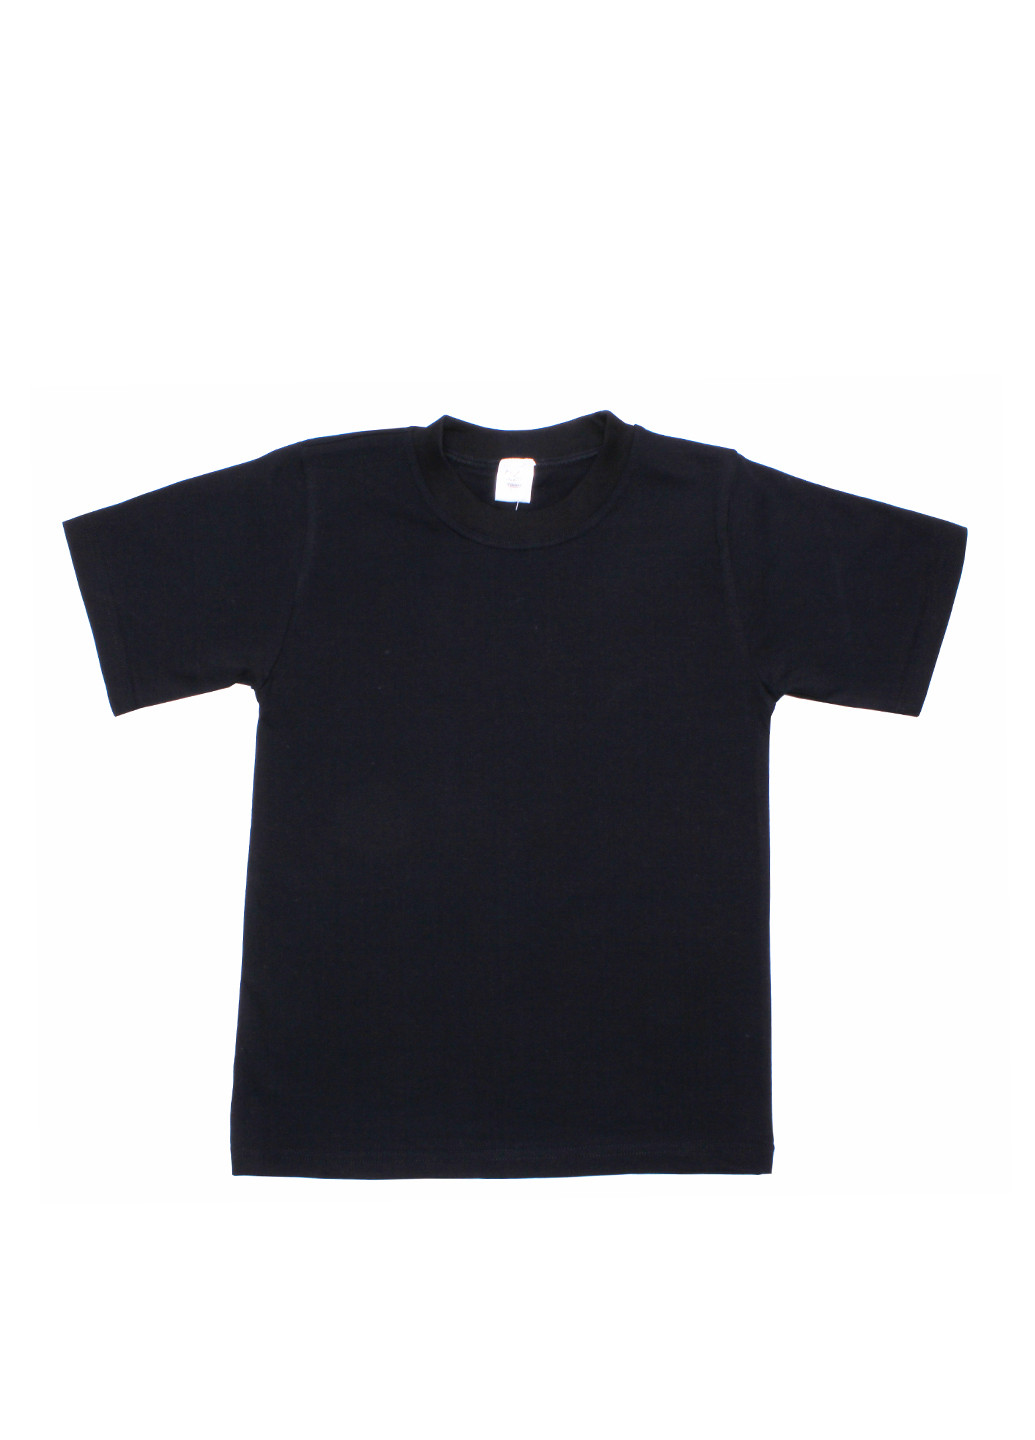 Черная летняя футболка Валери-Текс